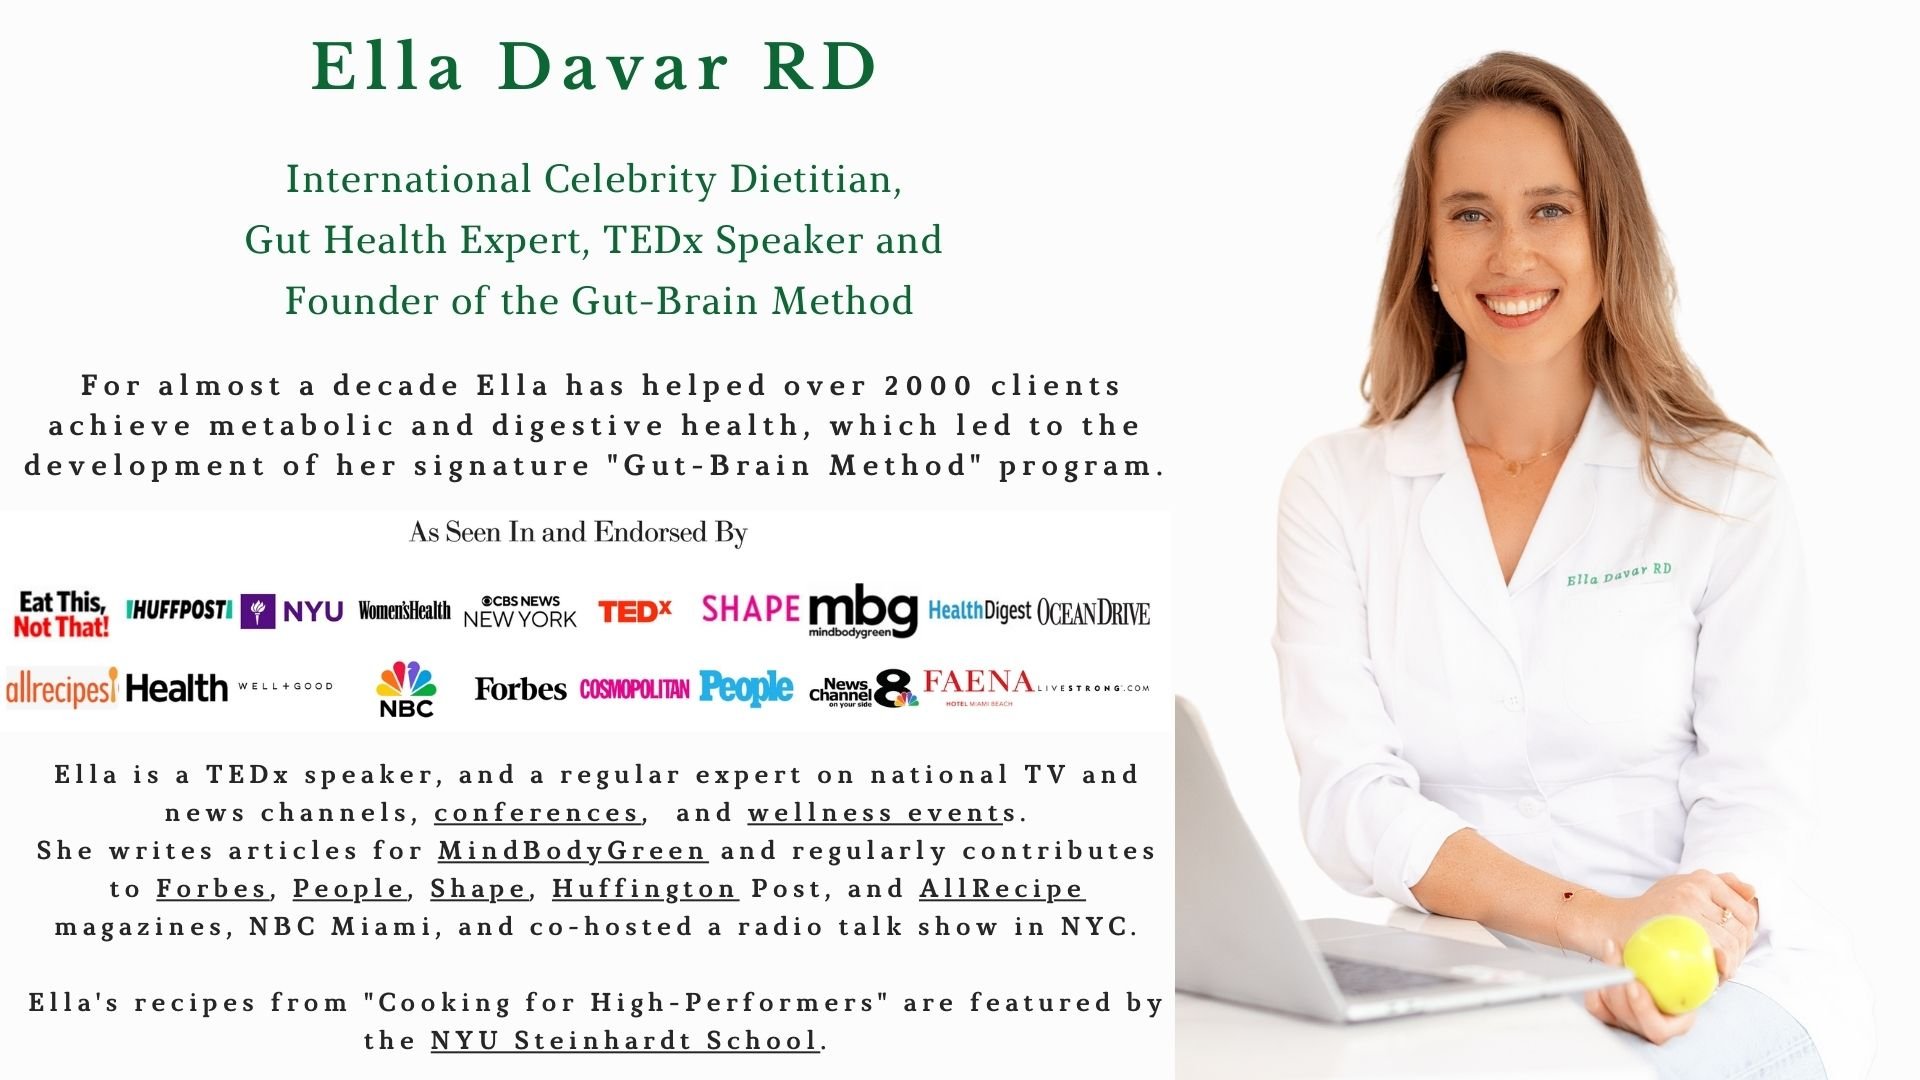 _Ella Davar RD Media Kit Spokesperson (Presentation (169)).jpg